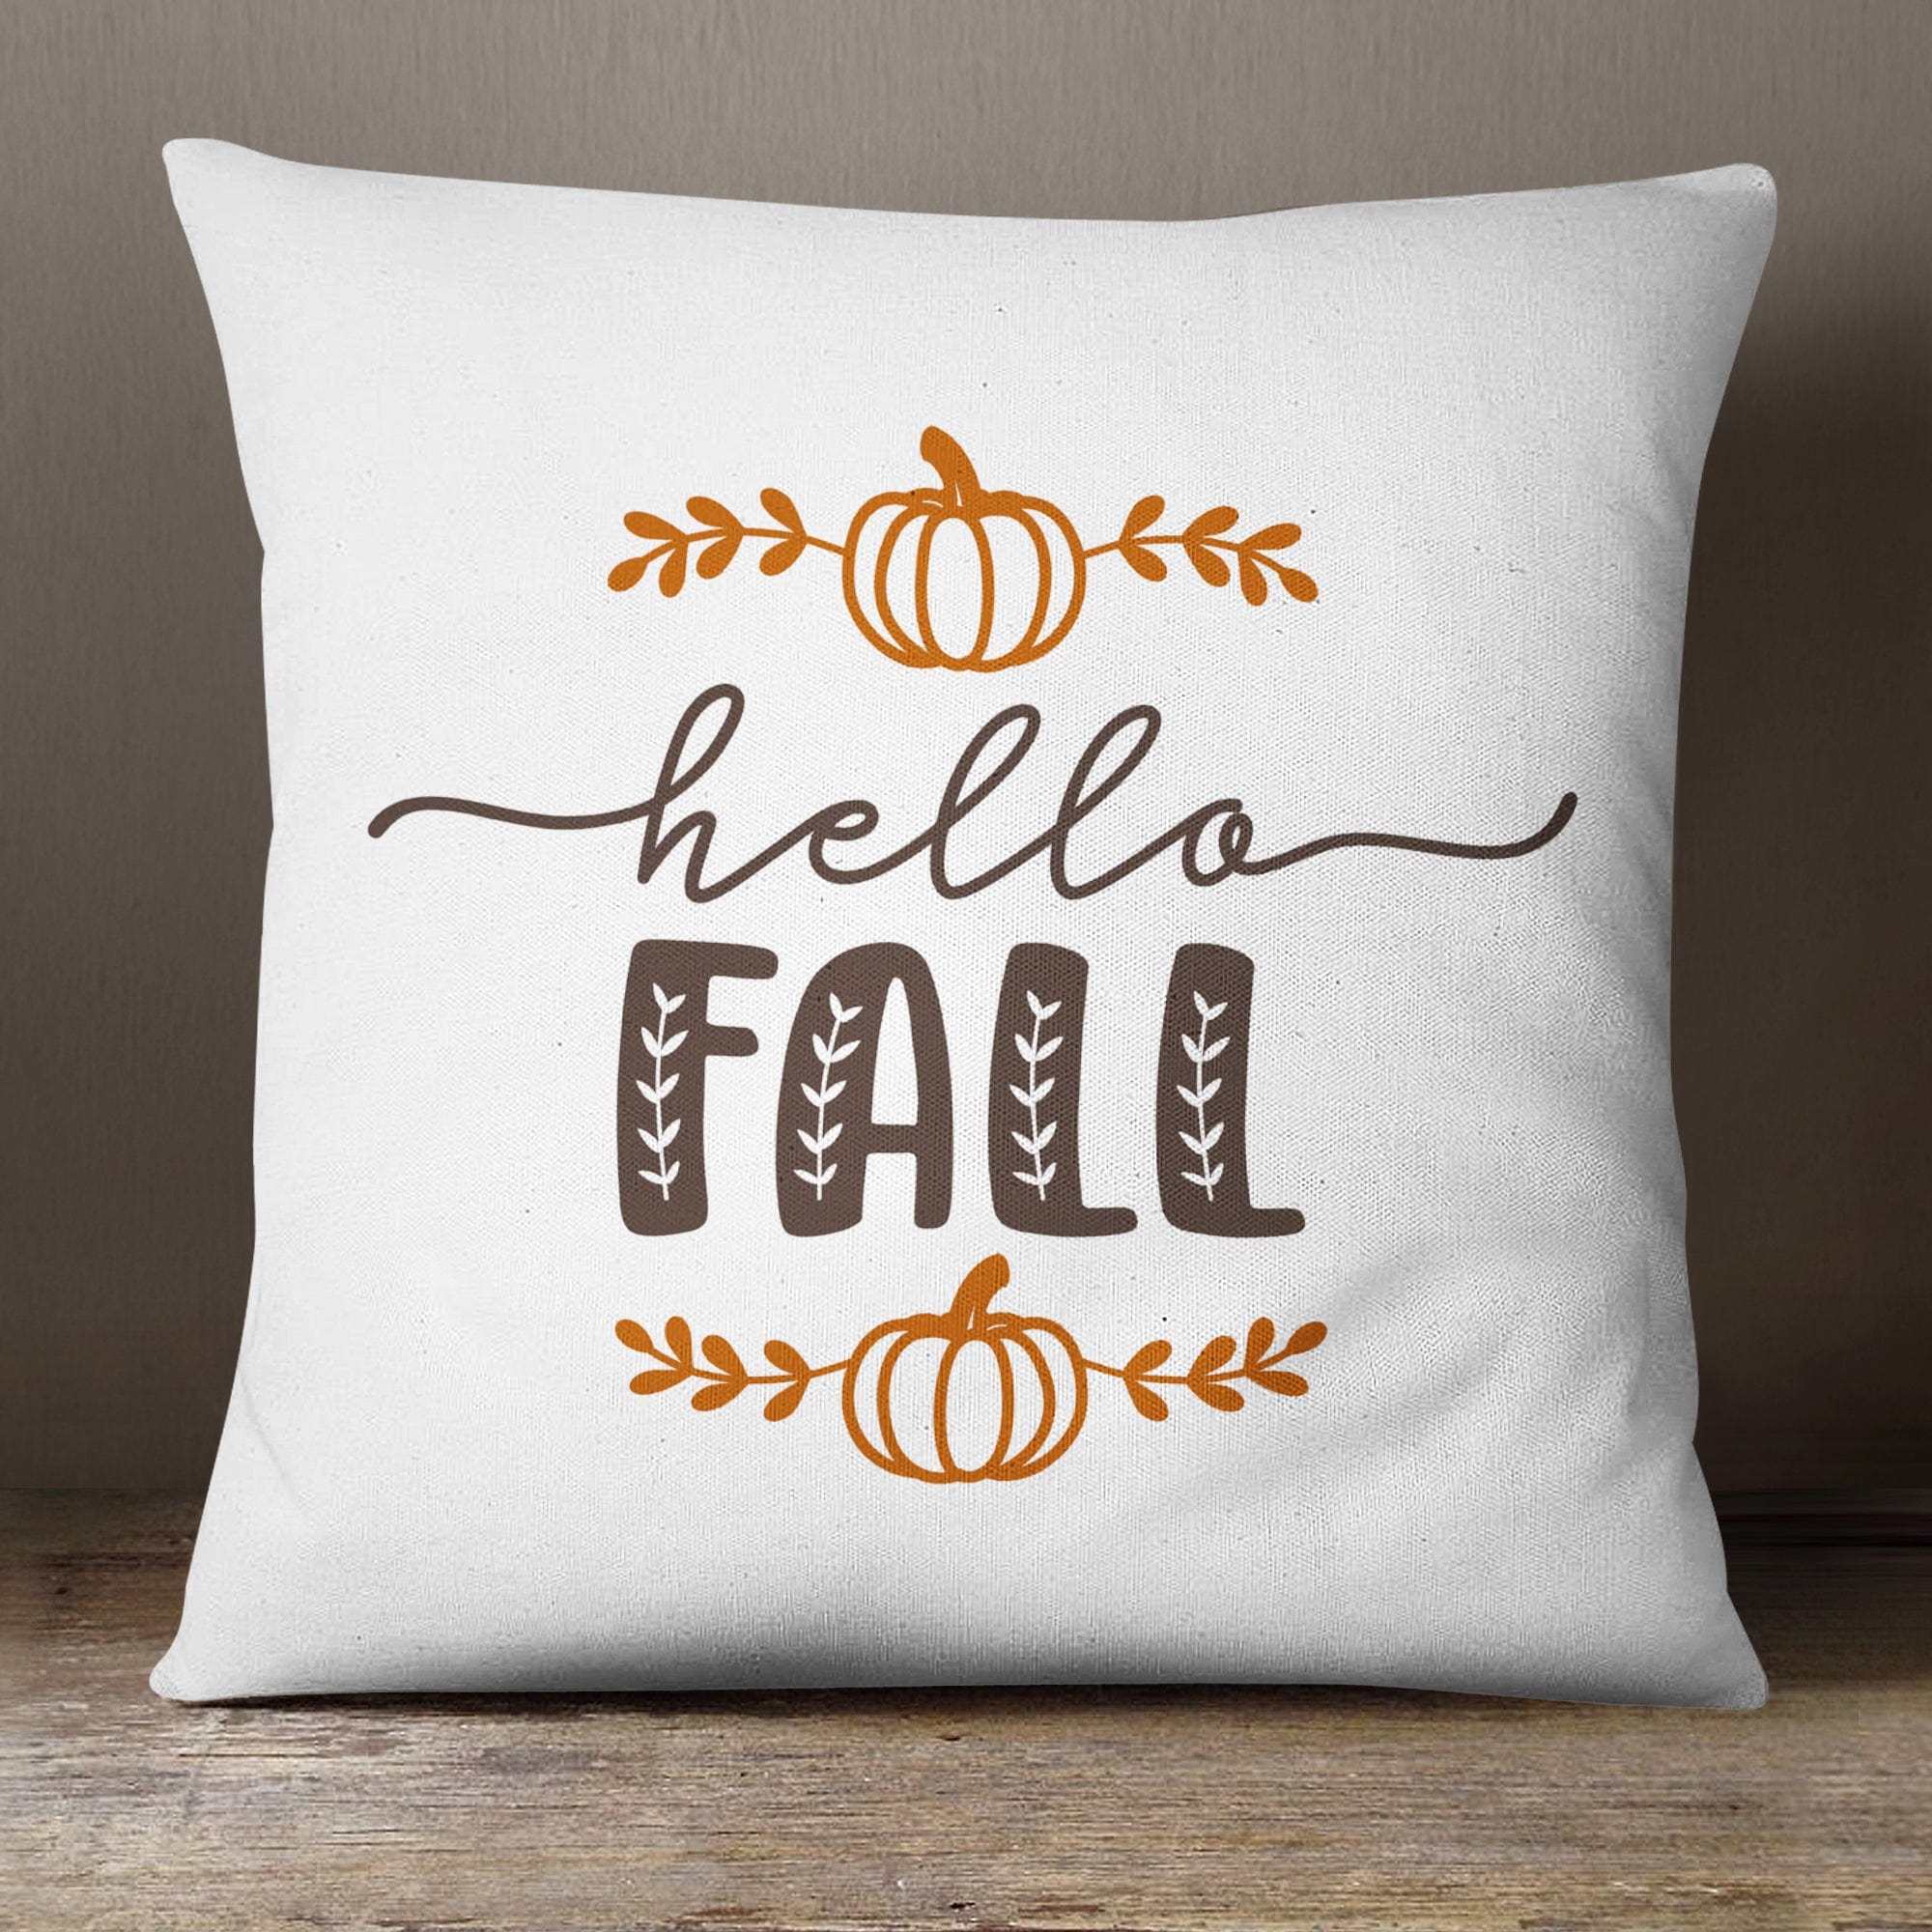 Farm Fresh Pumpkin Harvest—18x18 Pillow Cover – Lofty Living Shop